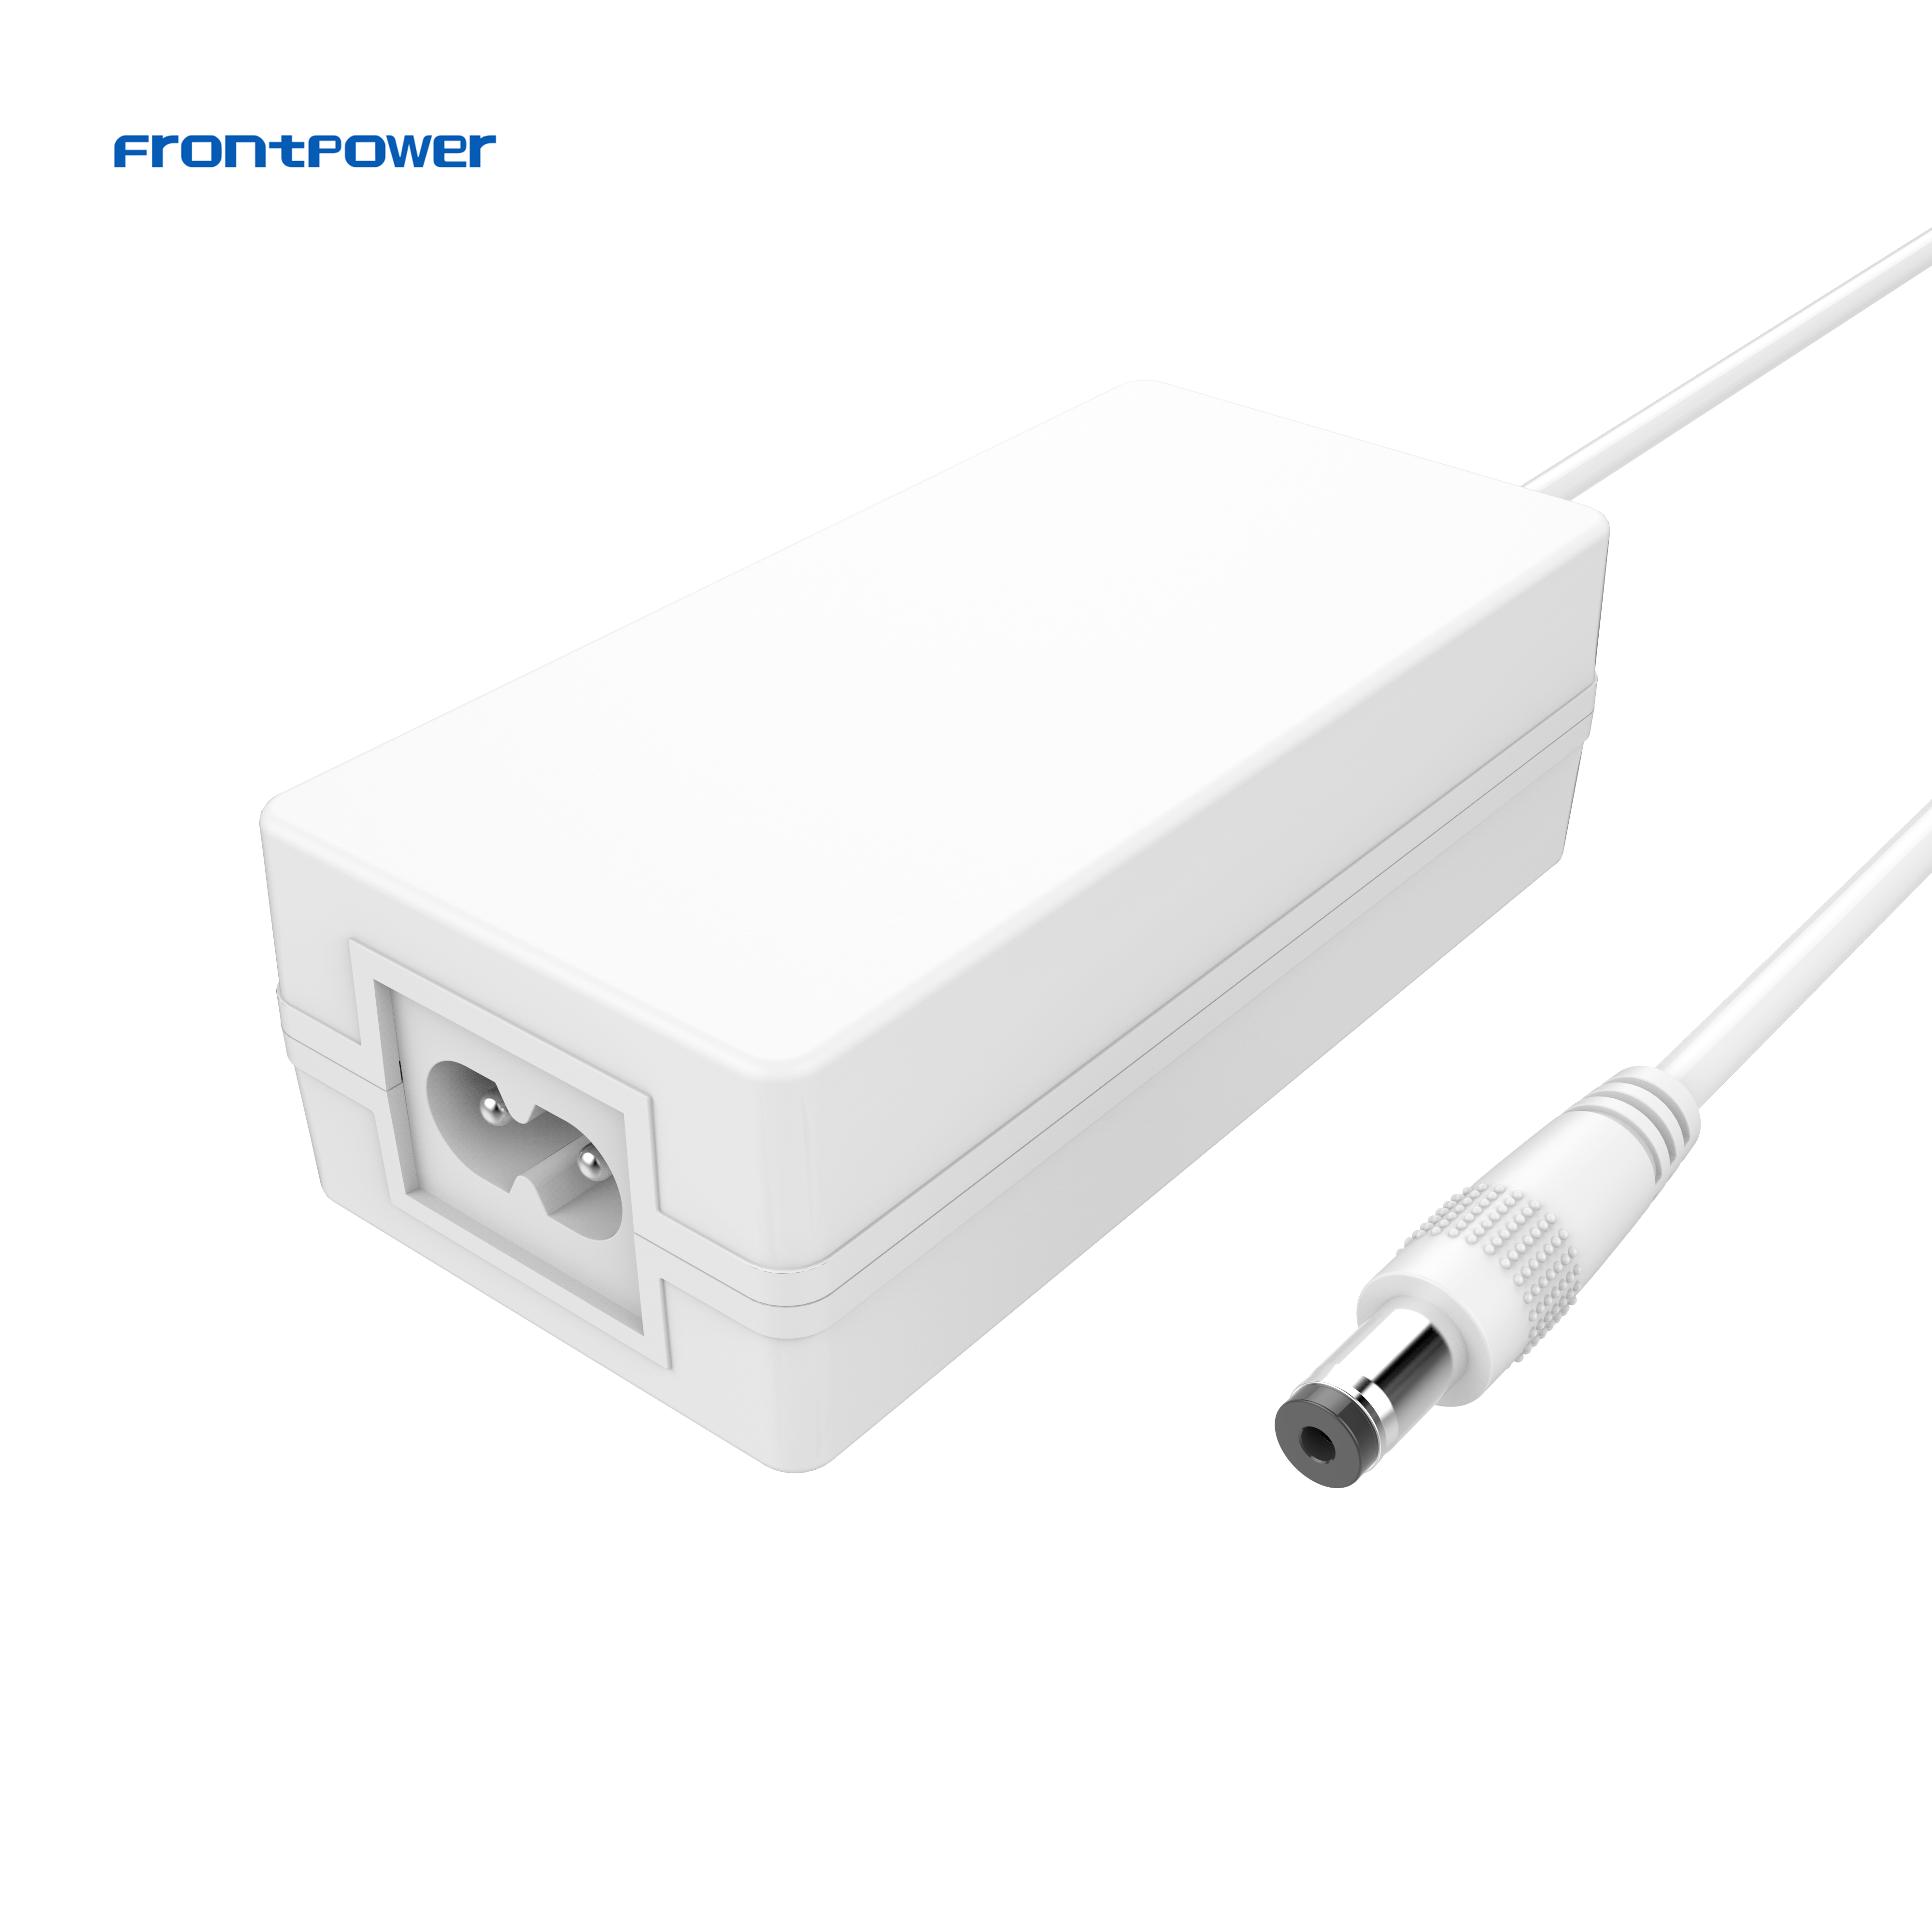 Frontpower 5v 3.5a black white desktop type power adaptor with EN62368/61558/60601 for laptop